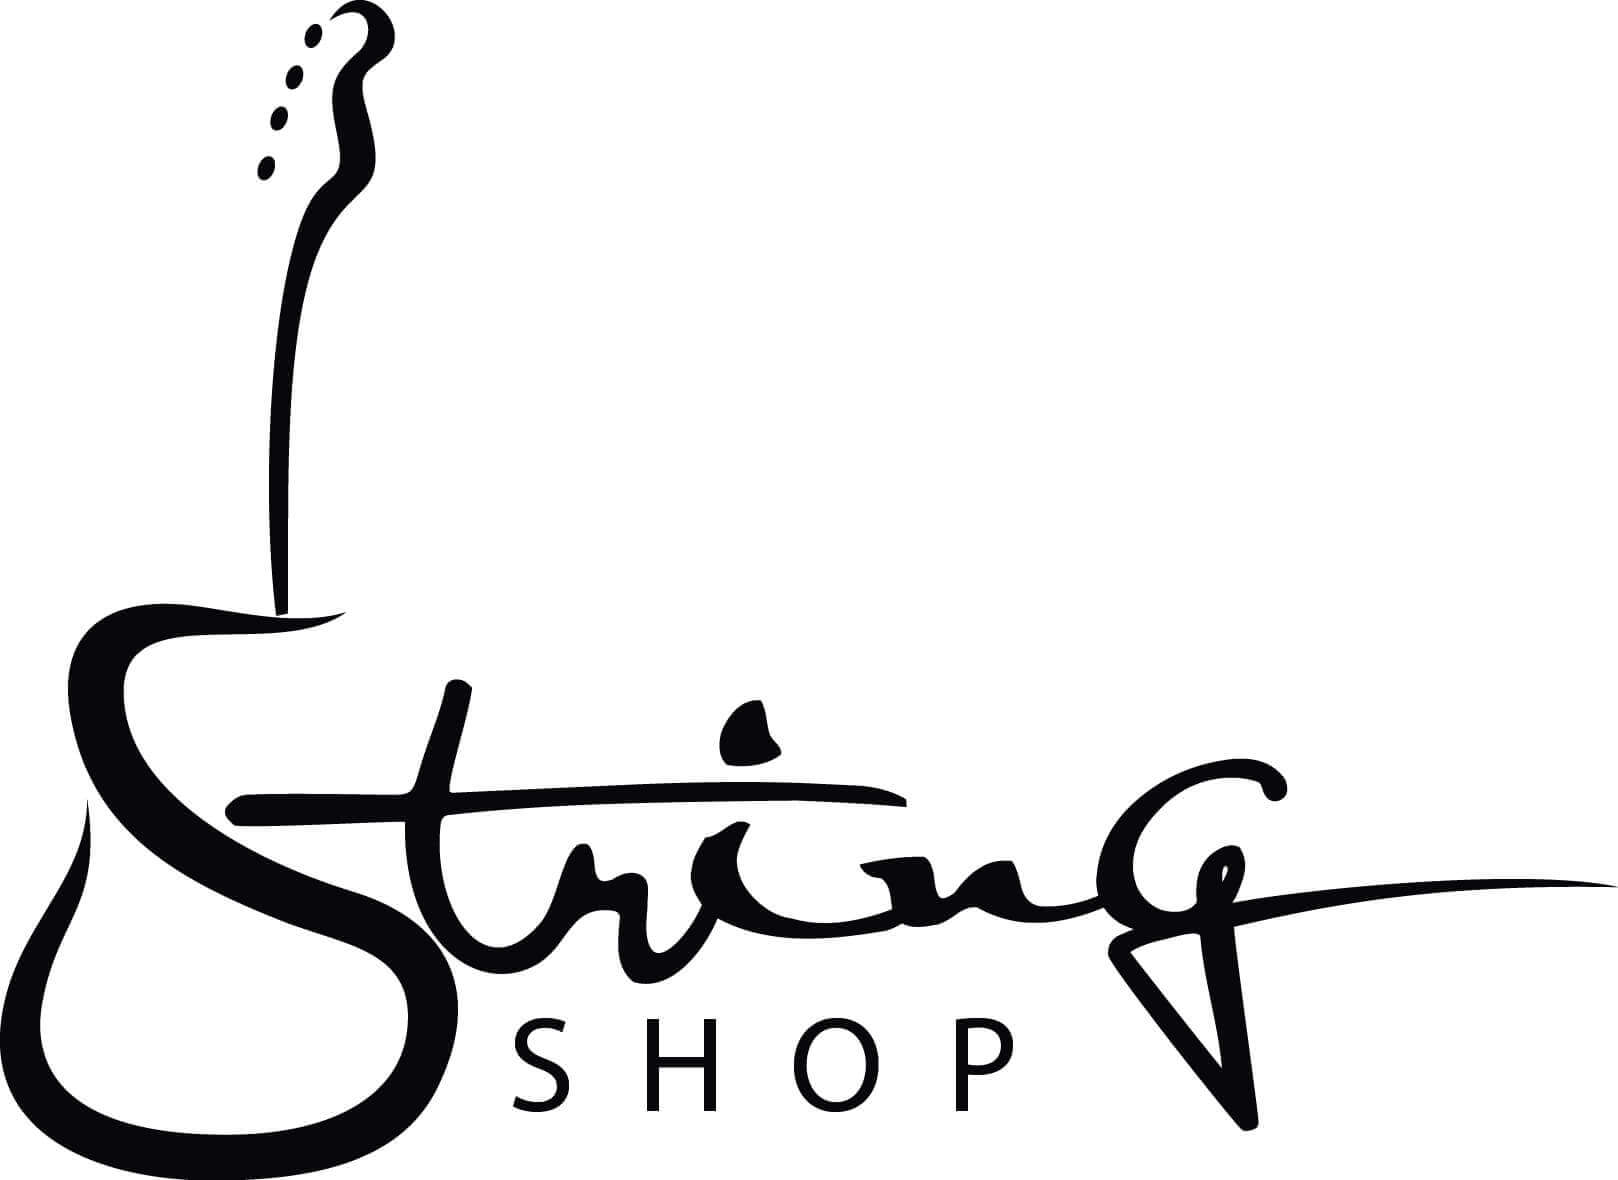 String Shop